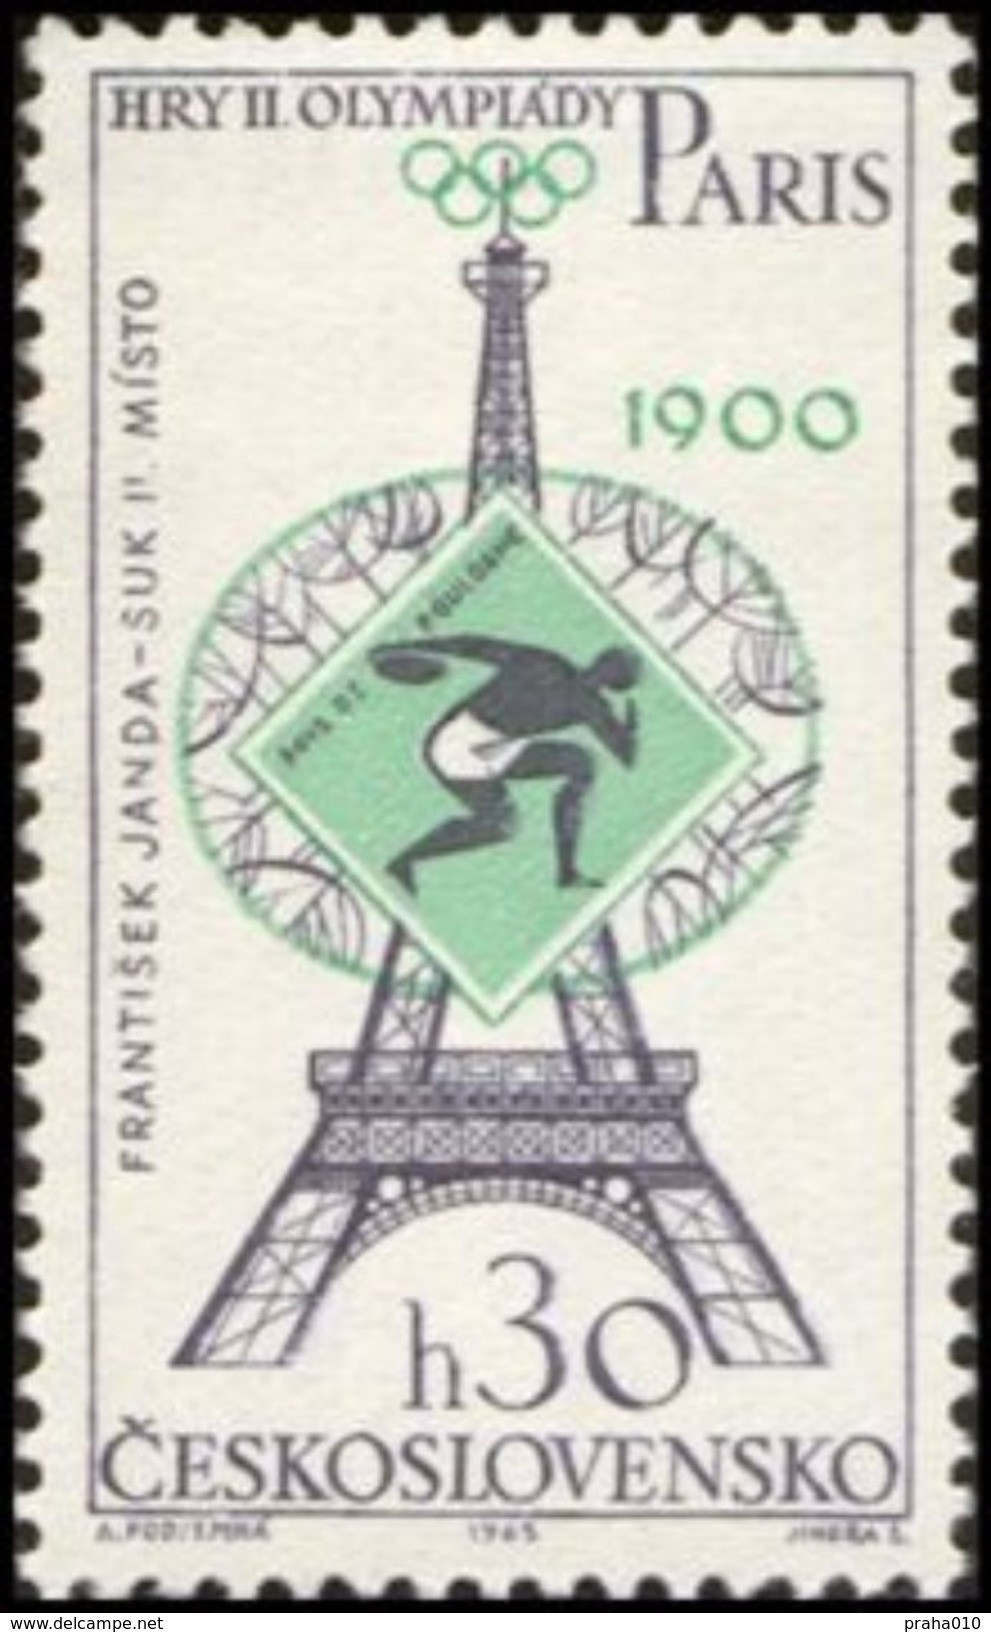 Czechoslovakia / Stamps (1965) 1429: Olympic Games 1900 Paris, F. Janda-Suk (discus Throw); Painter: Anna Podzemna - Verano 1900: Paris